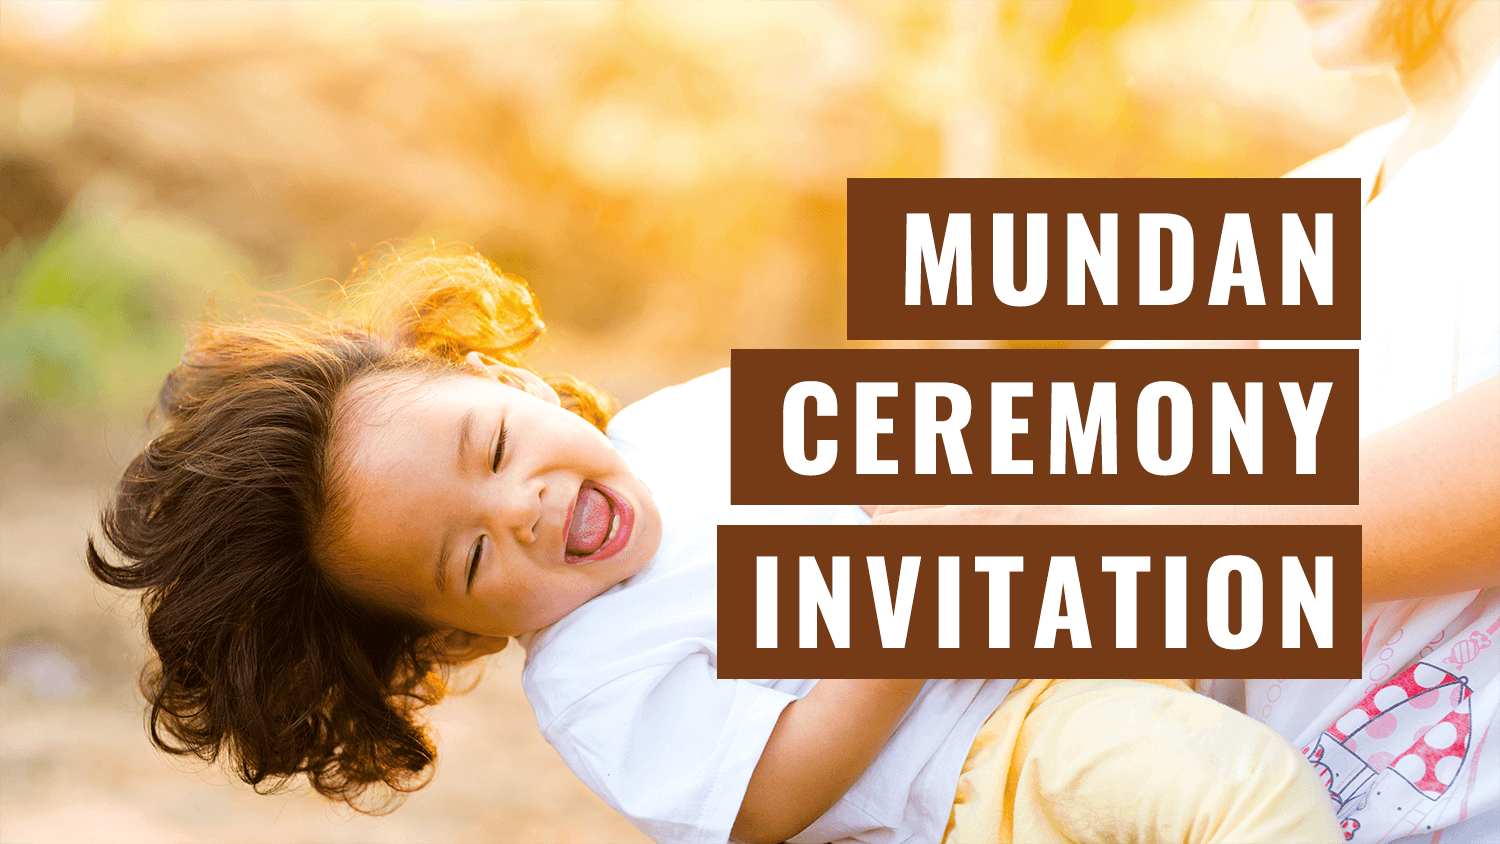 8+ Mundan Ceremony Invitations to Customize and Send